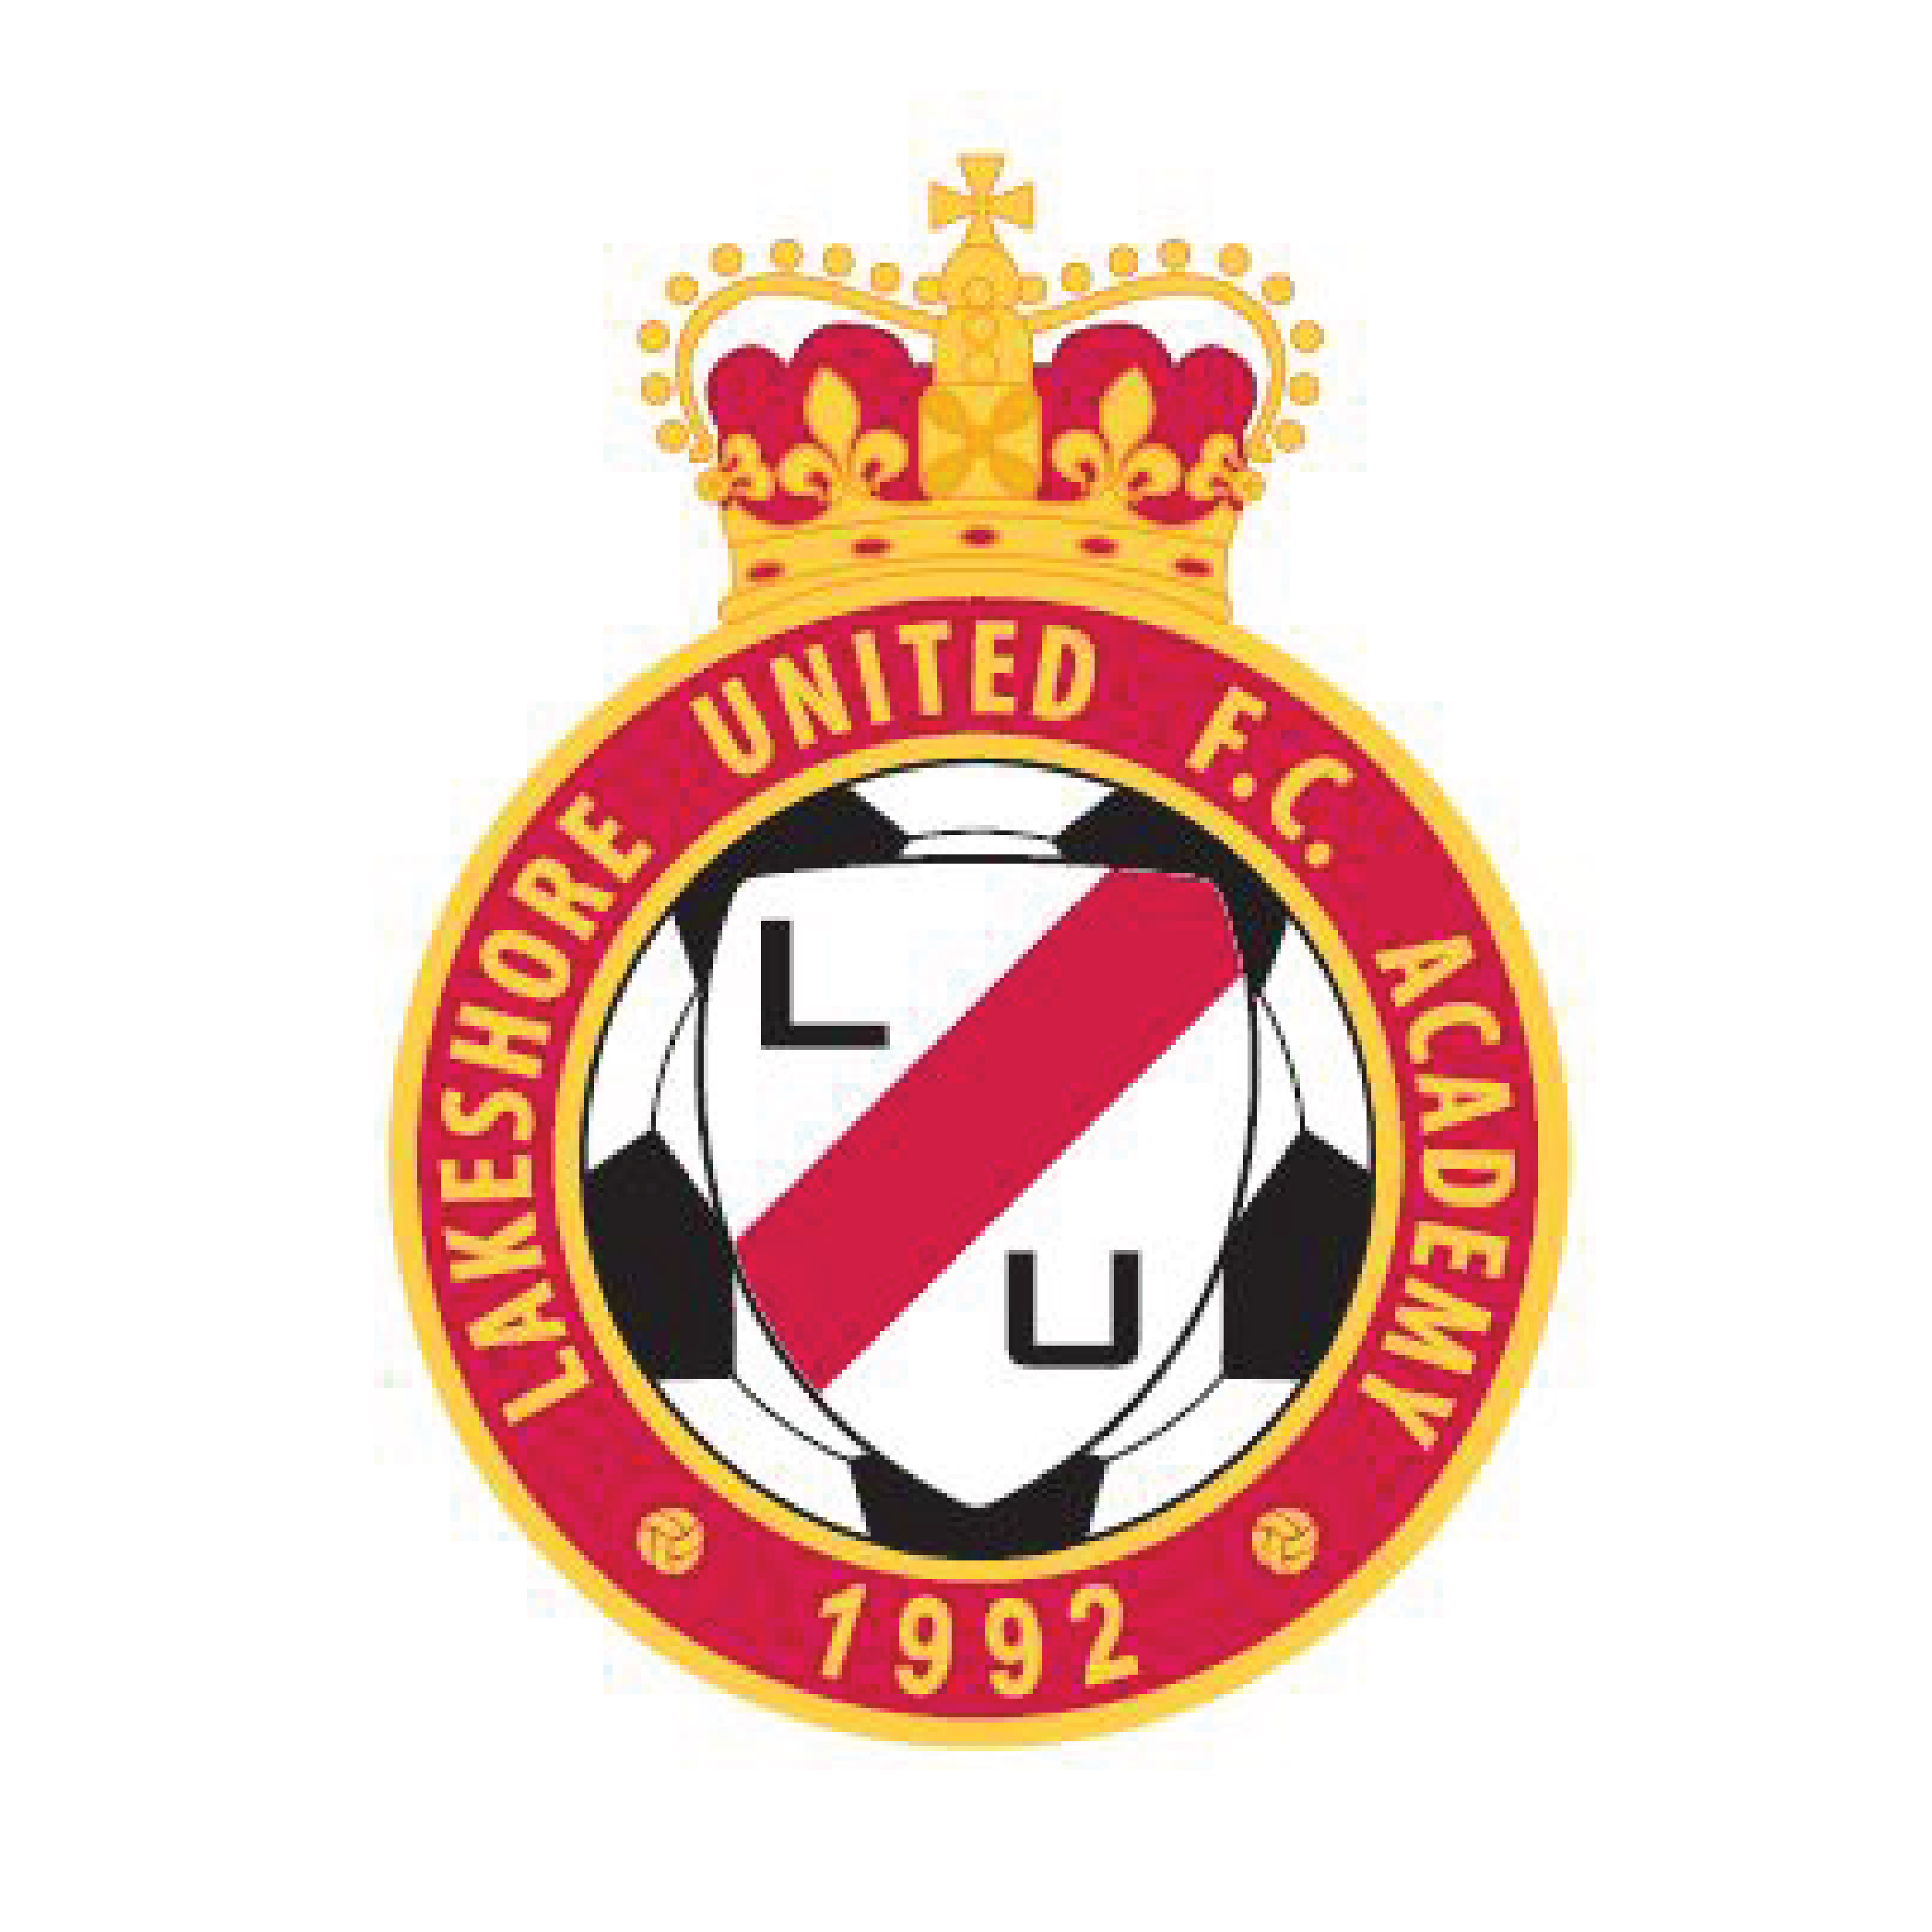 Lakeshore United Football Club